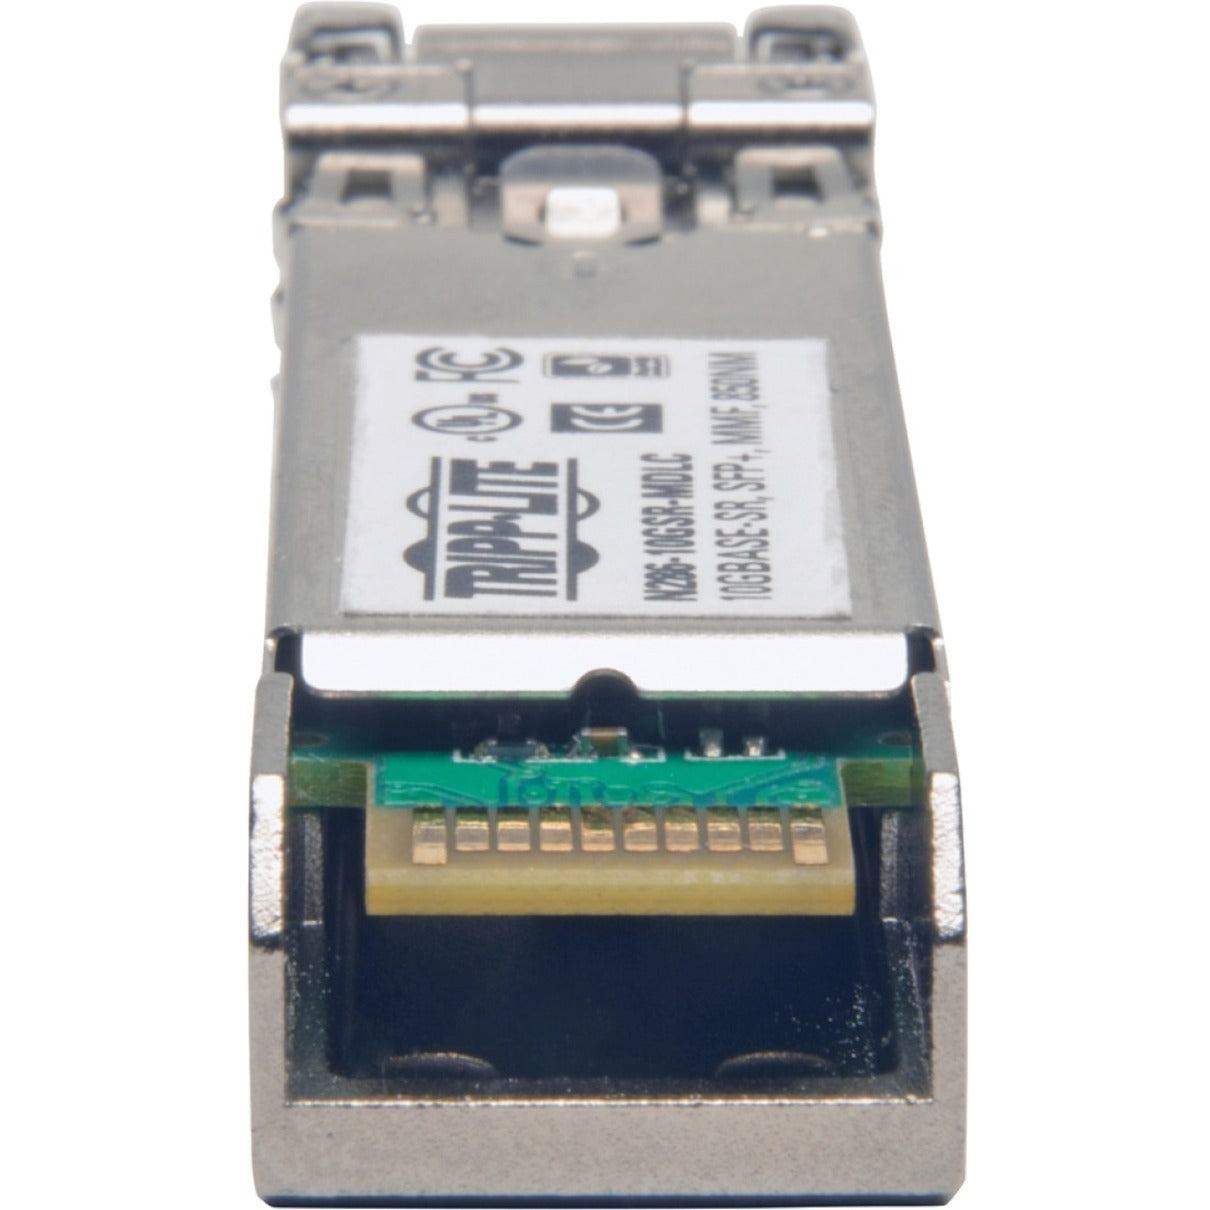 Tripp Lite N286-10GSR-MDLC Cisco Compatible 10Gbase-SR SFP+ Transceiver with DDM, MMF, 850nm, 300M, LC